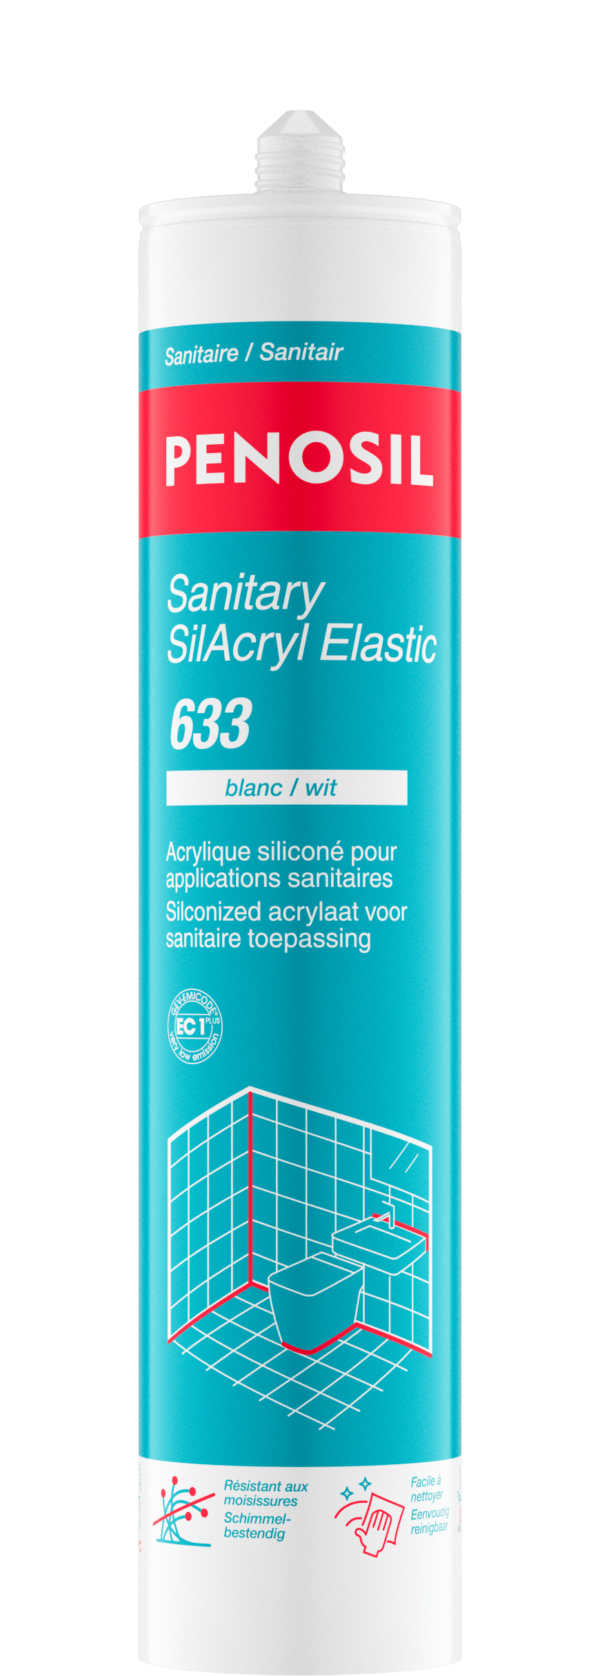 PENOSIL Sanitary SilAcryl Elastic 633